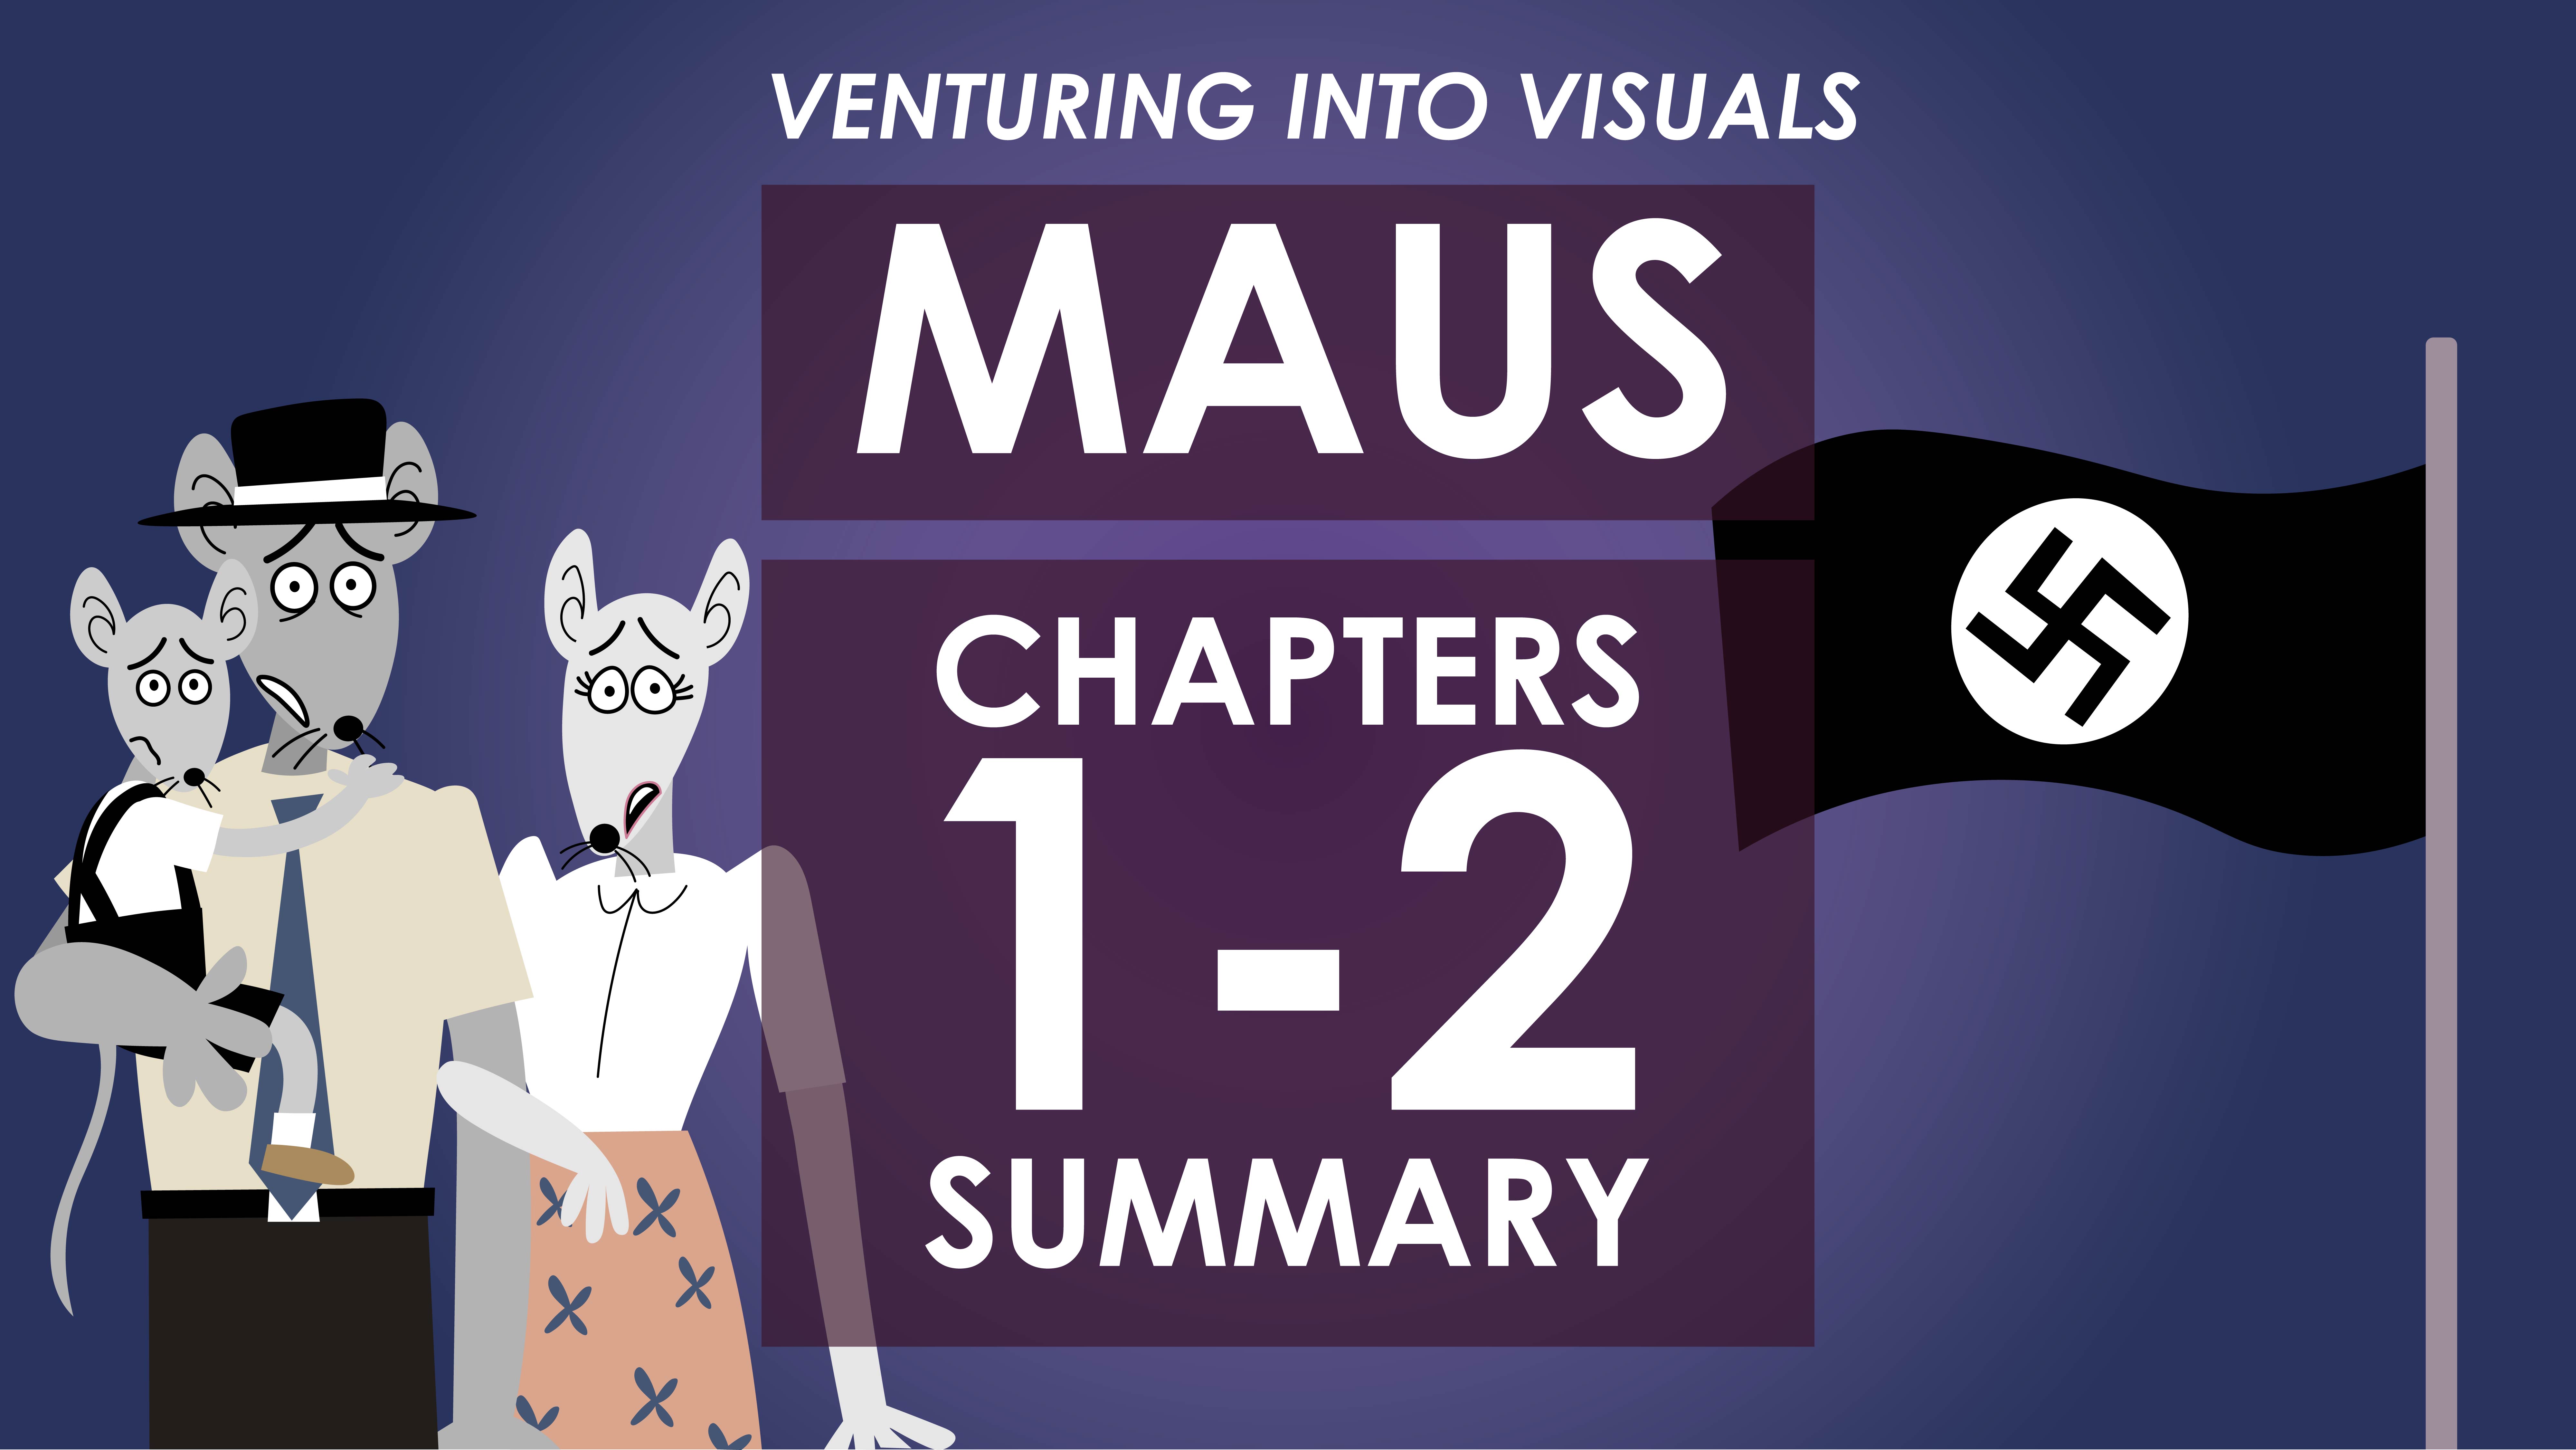 Maus - Art Spiegelman - Prologue & Chapters 1-2 Summary - Venturing Into Visuals Series